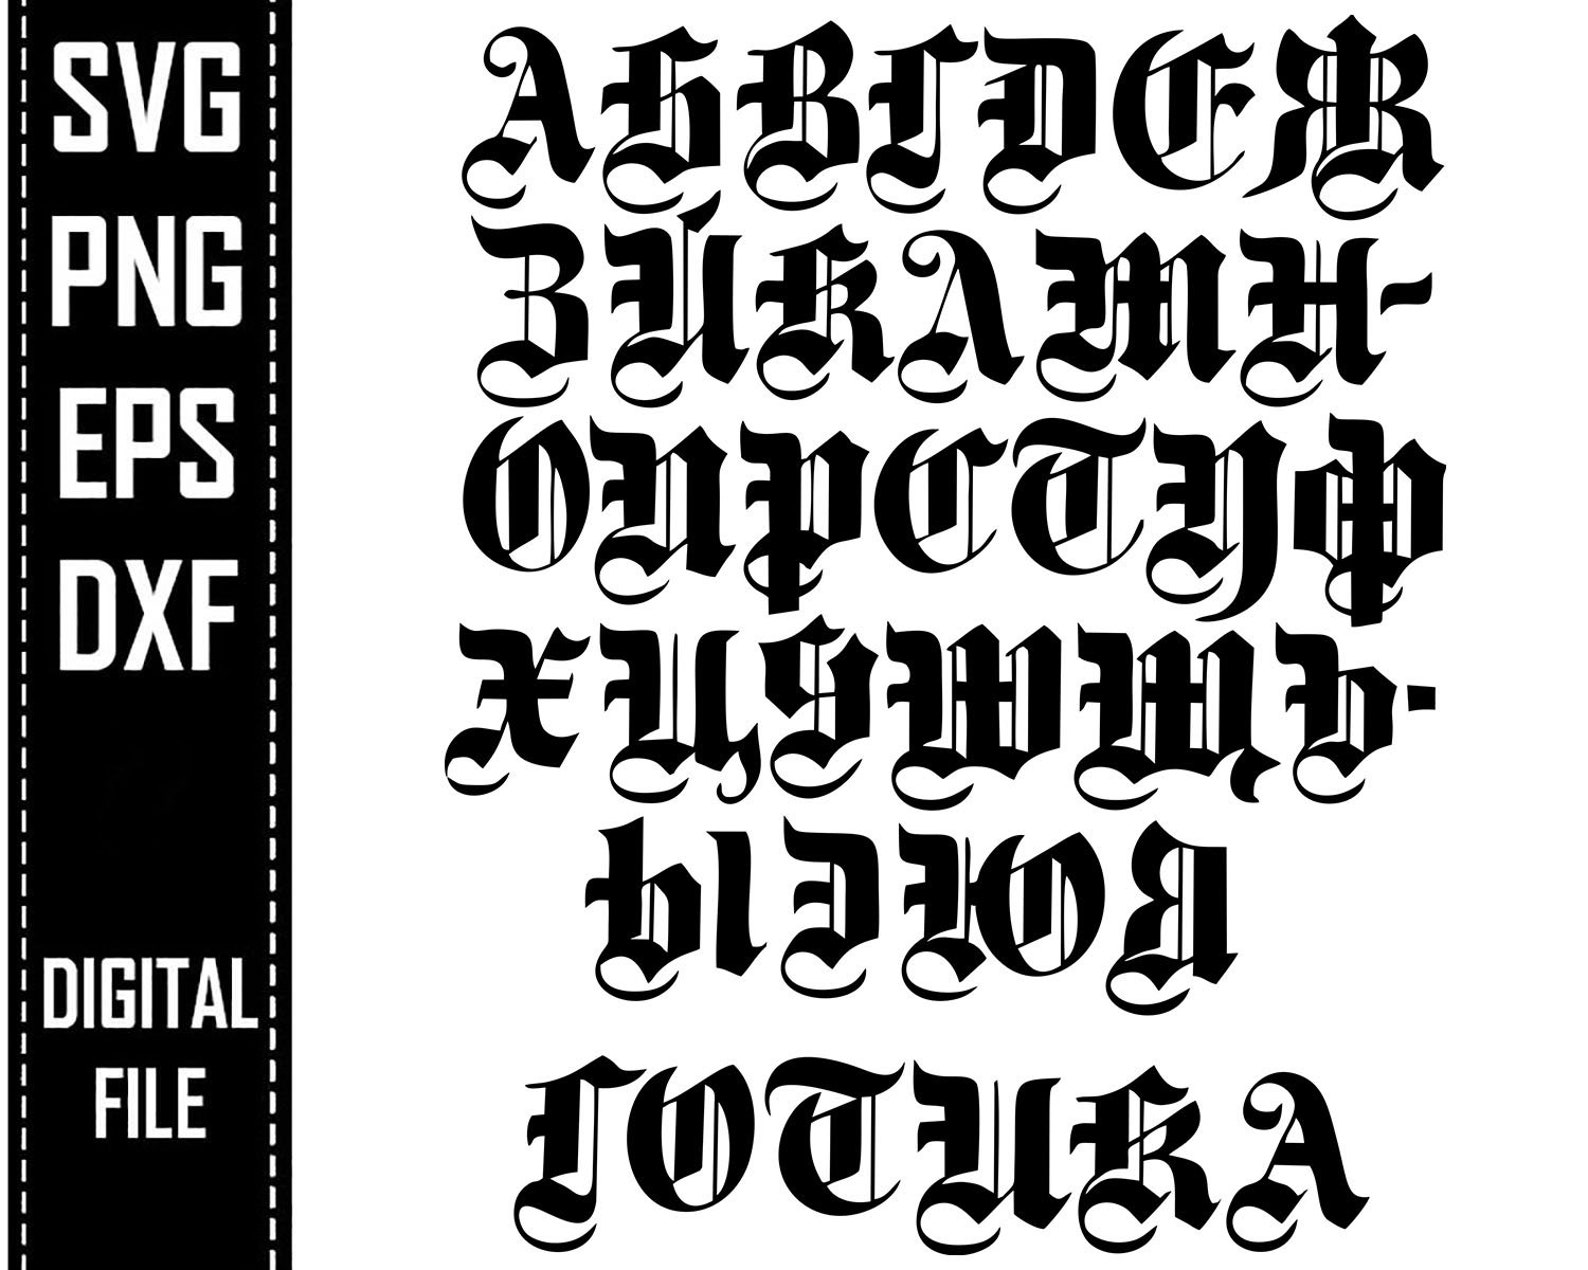 Dark Font Alphabet Letters Goth Hell Devil Demon Baphomet 666 | Etsy